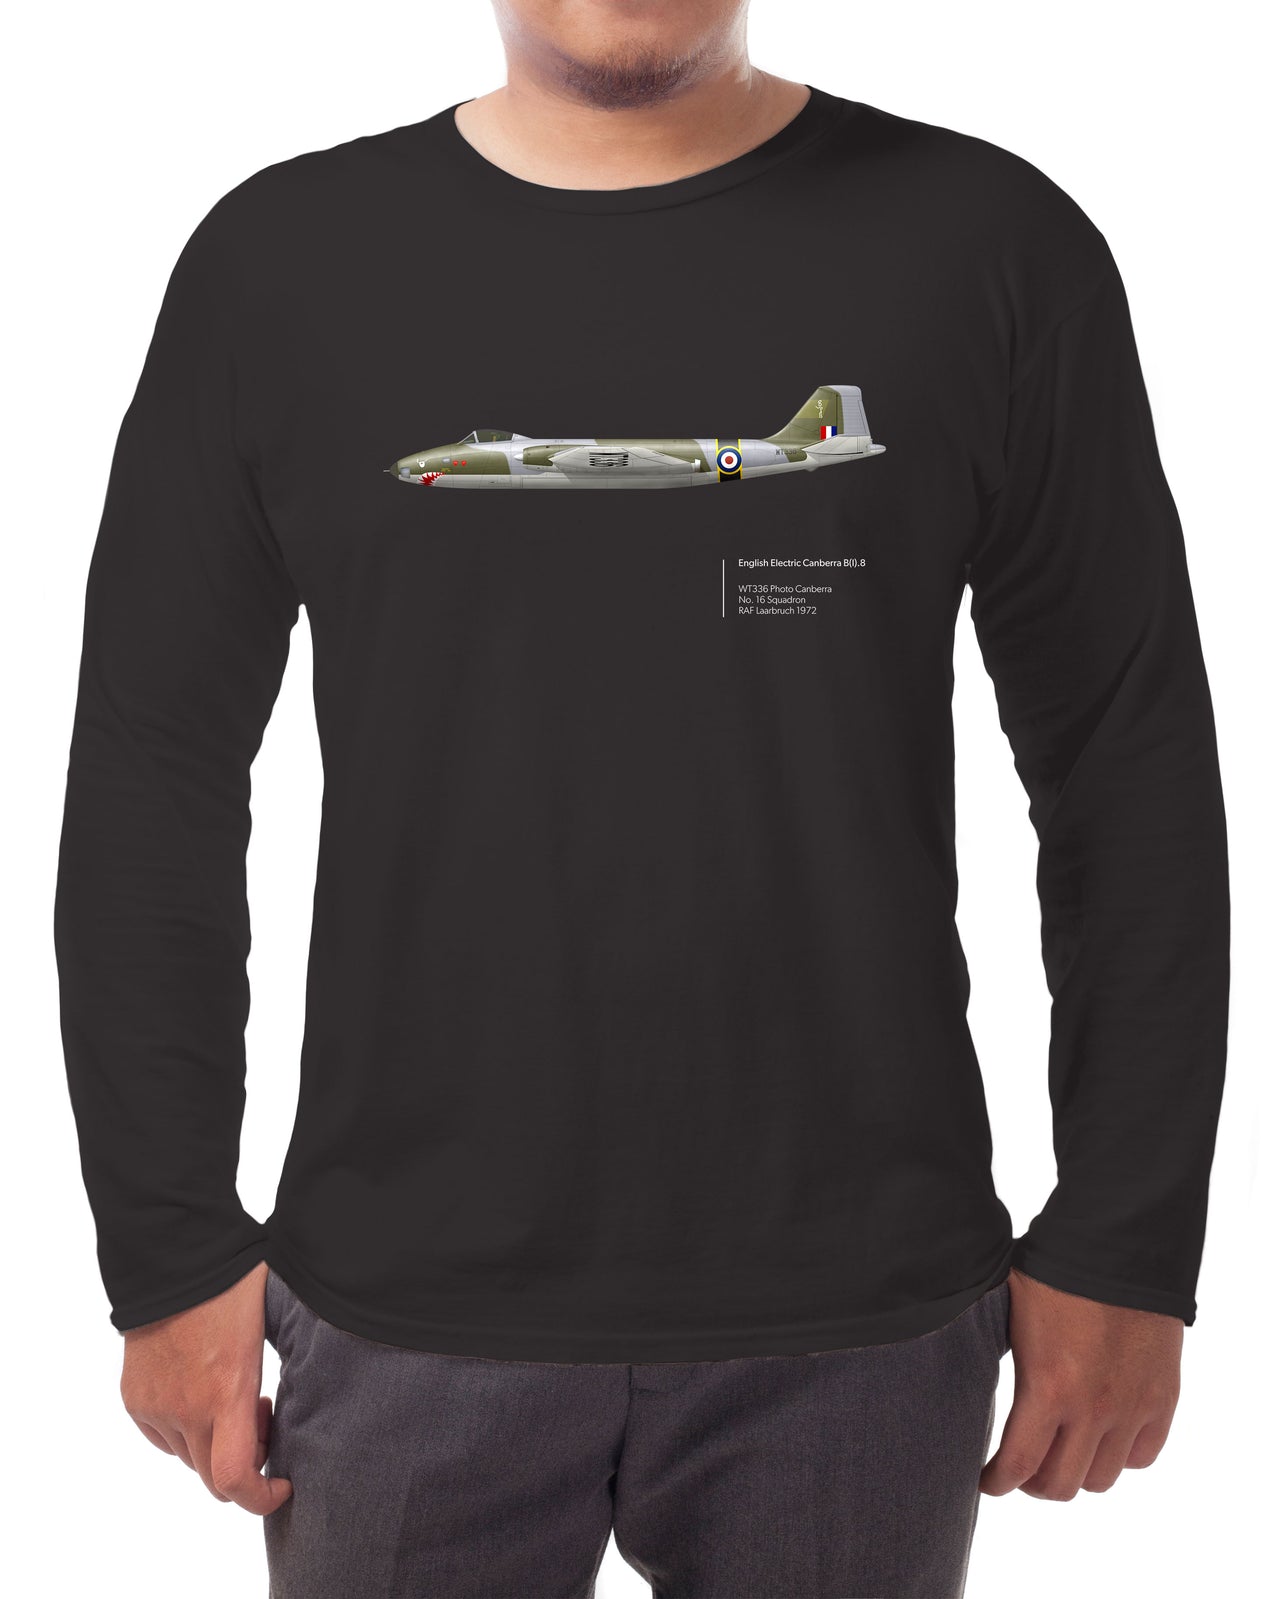 Canberra B(I).8 - Long-sleeve T-shirt